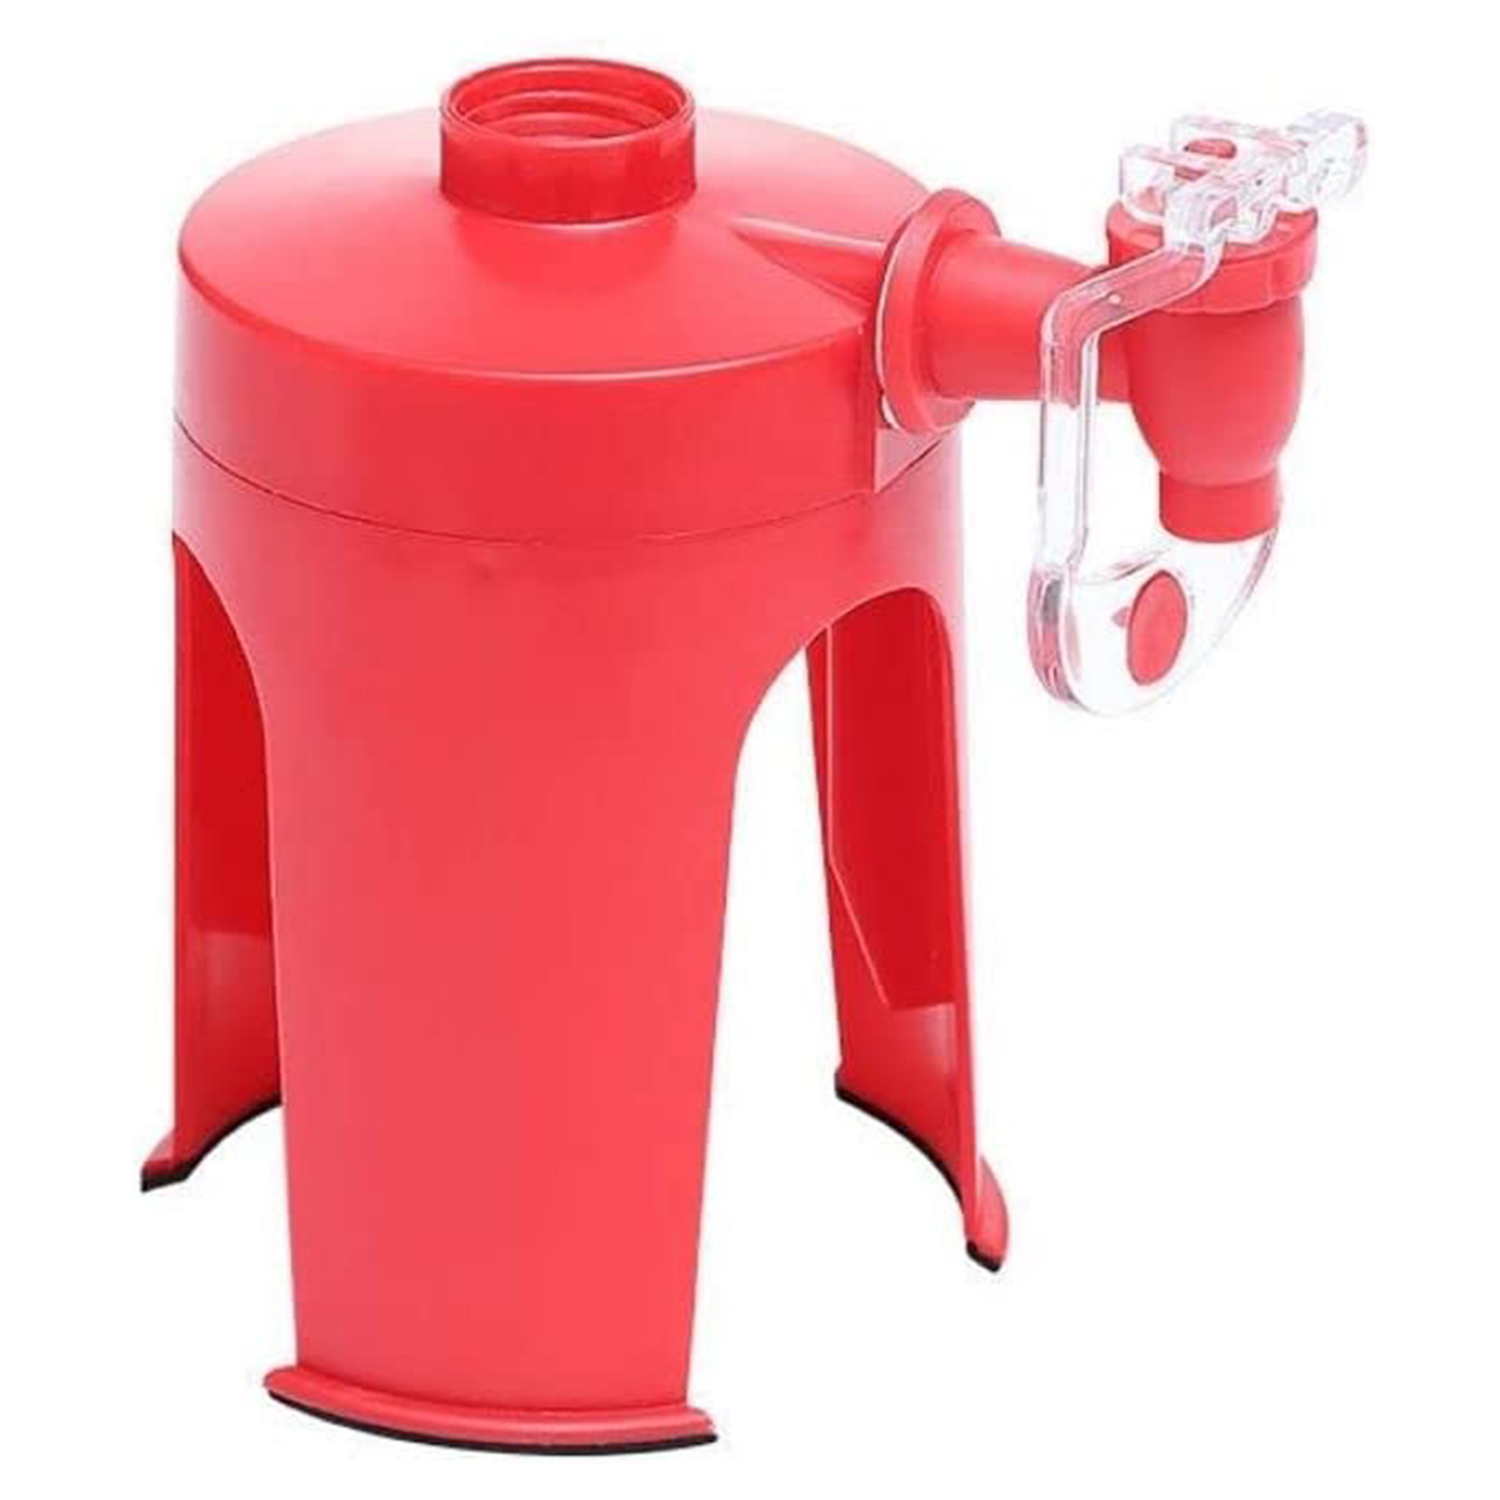 Plastic Beverage Dispenser 0.6gal/0.8gal Heavy Duty Drink - Temu